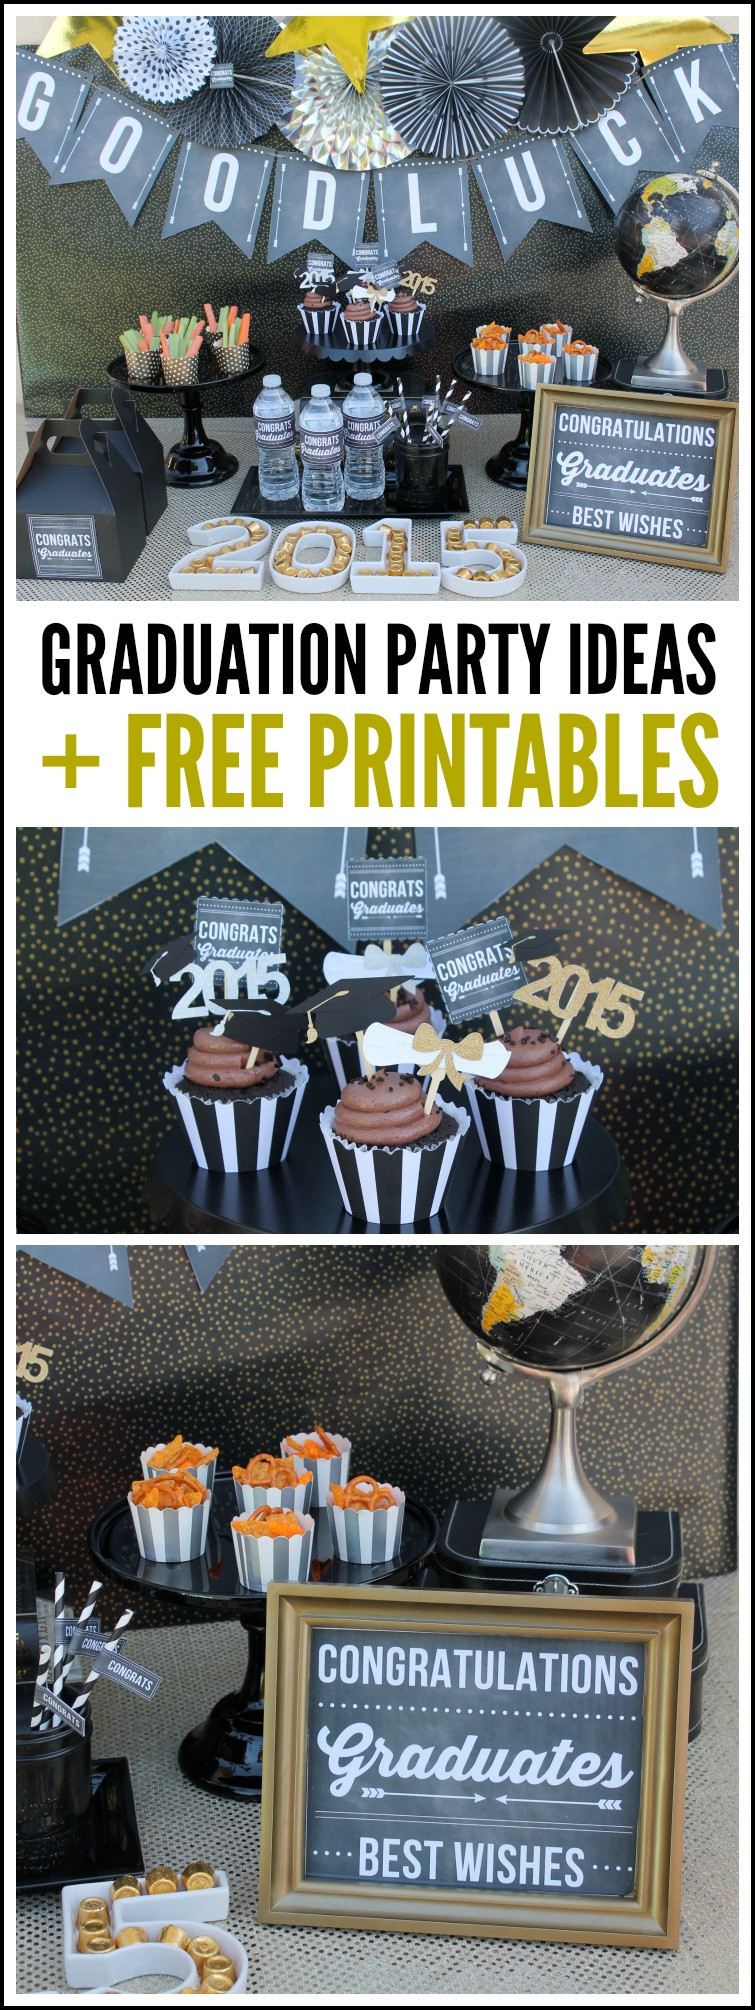 Party Favor Ideas For Graduation Party
 Graduation Party Ideas Free Printables